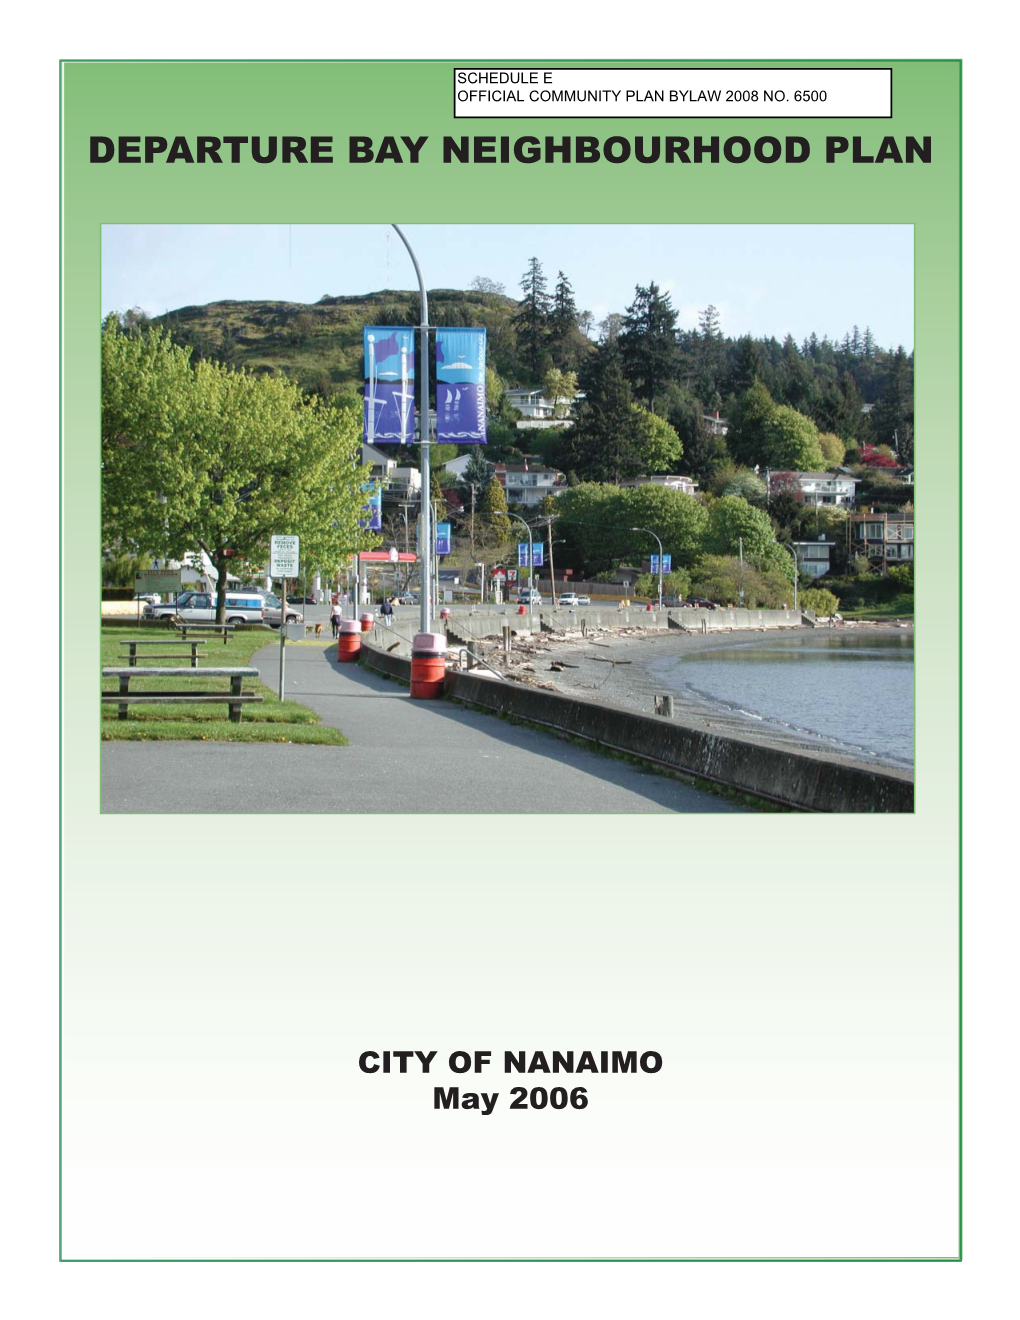 Departure Bay Neighbourhood Plan